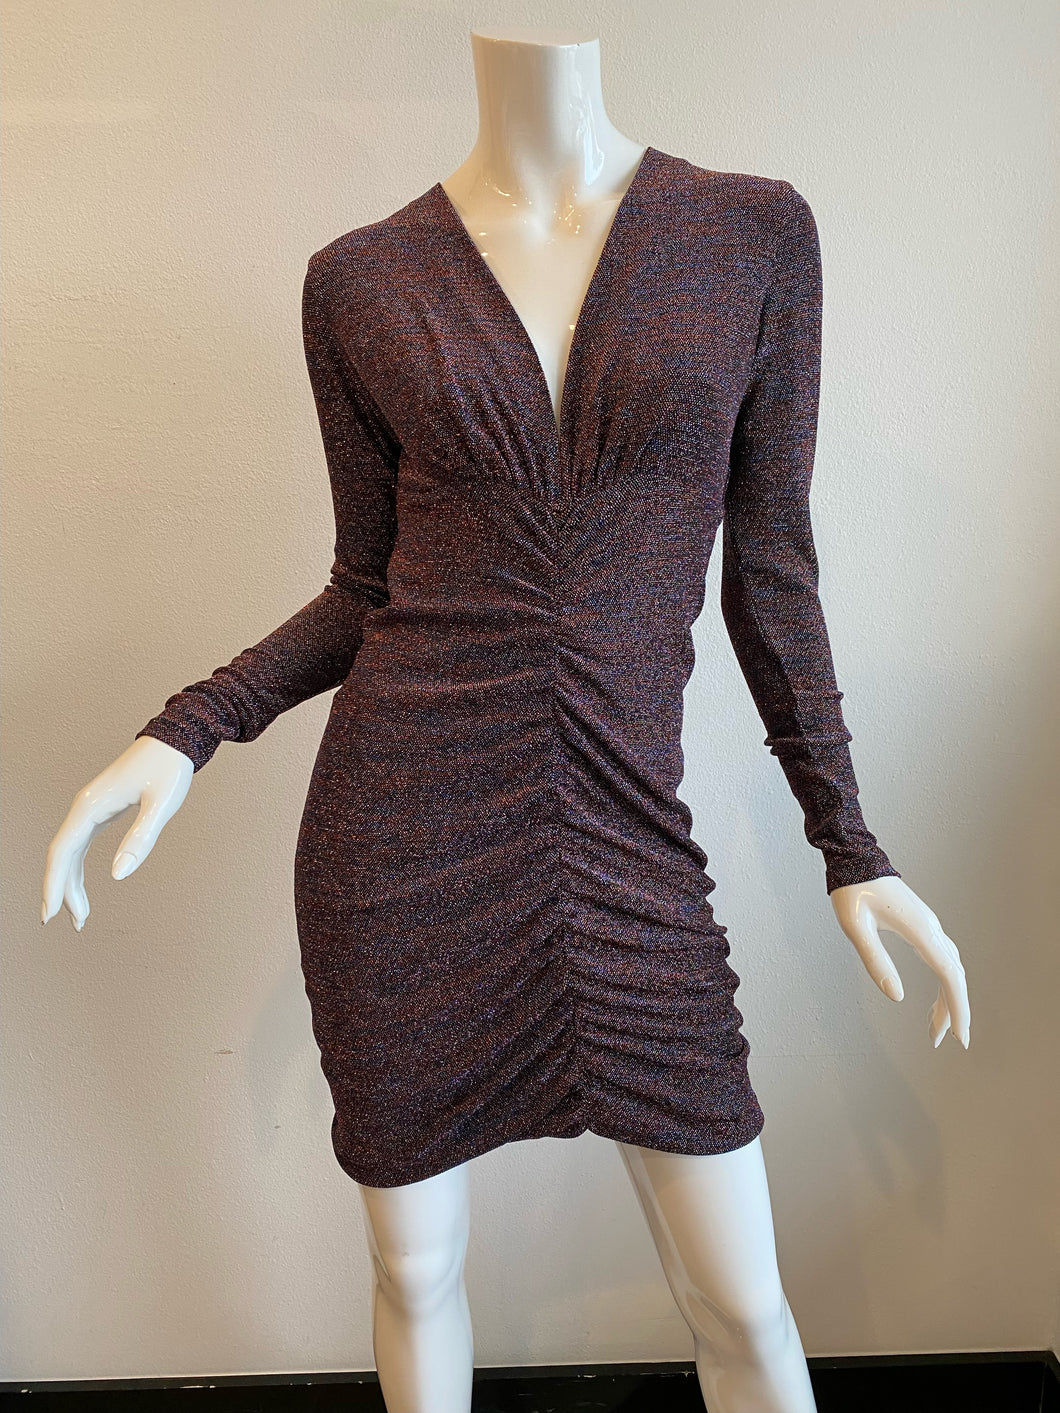 Gilner Farrar - Darcy Dress - Multi Color Sparkle